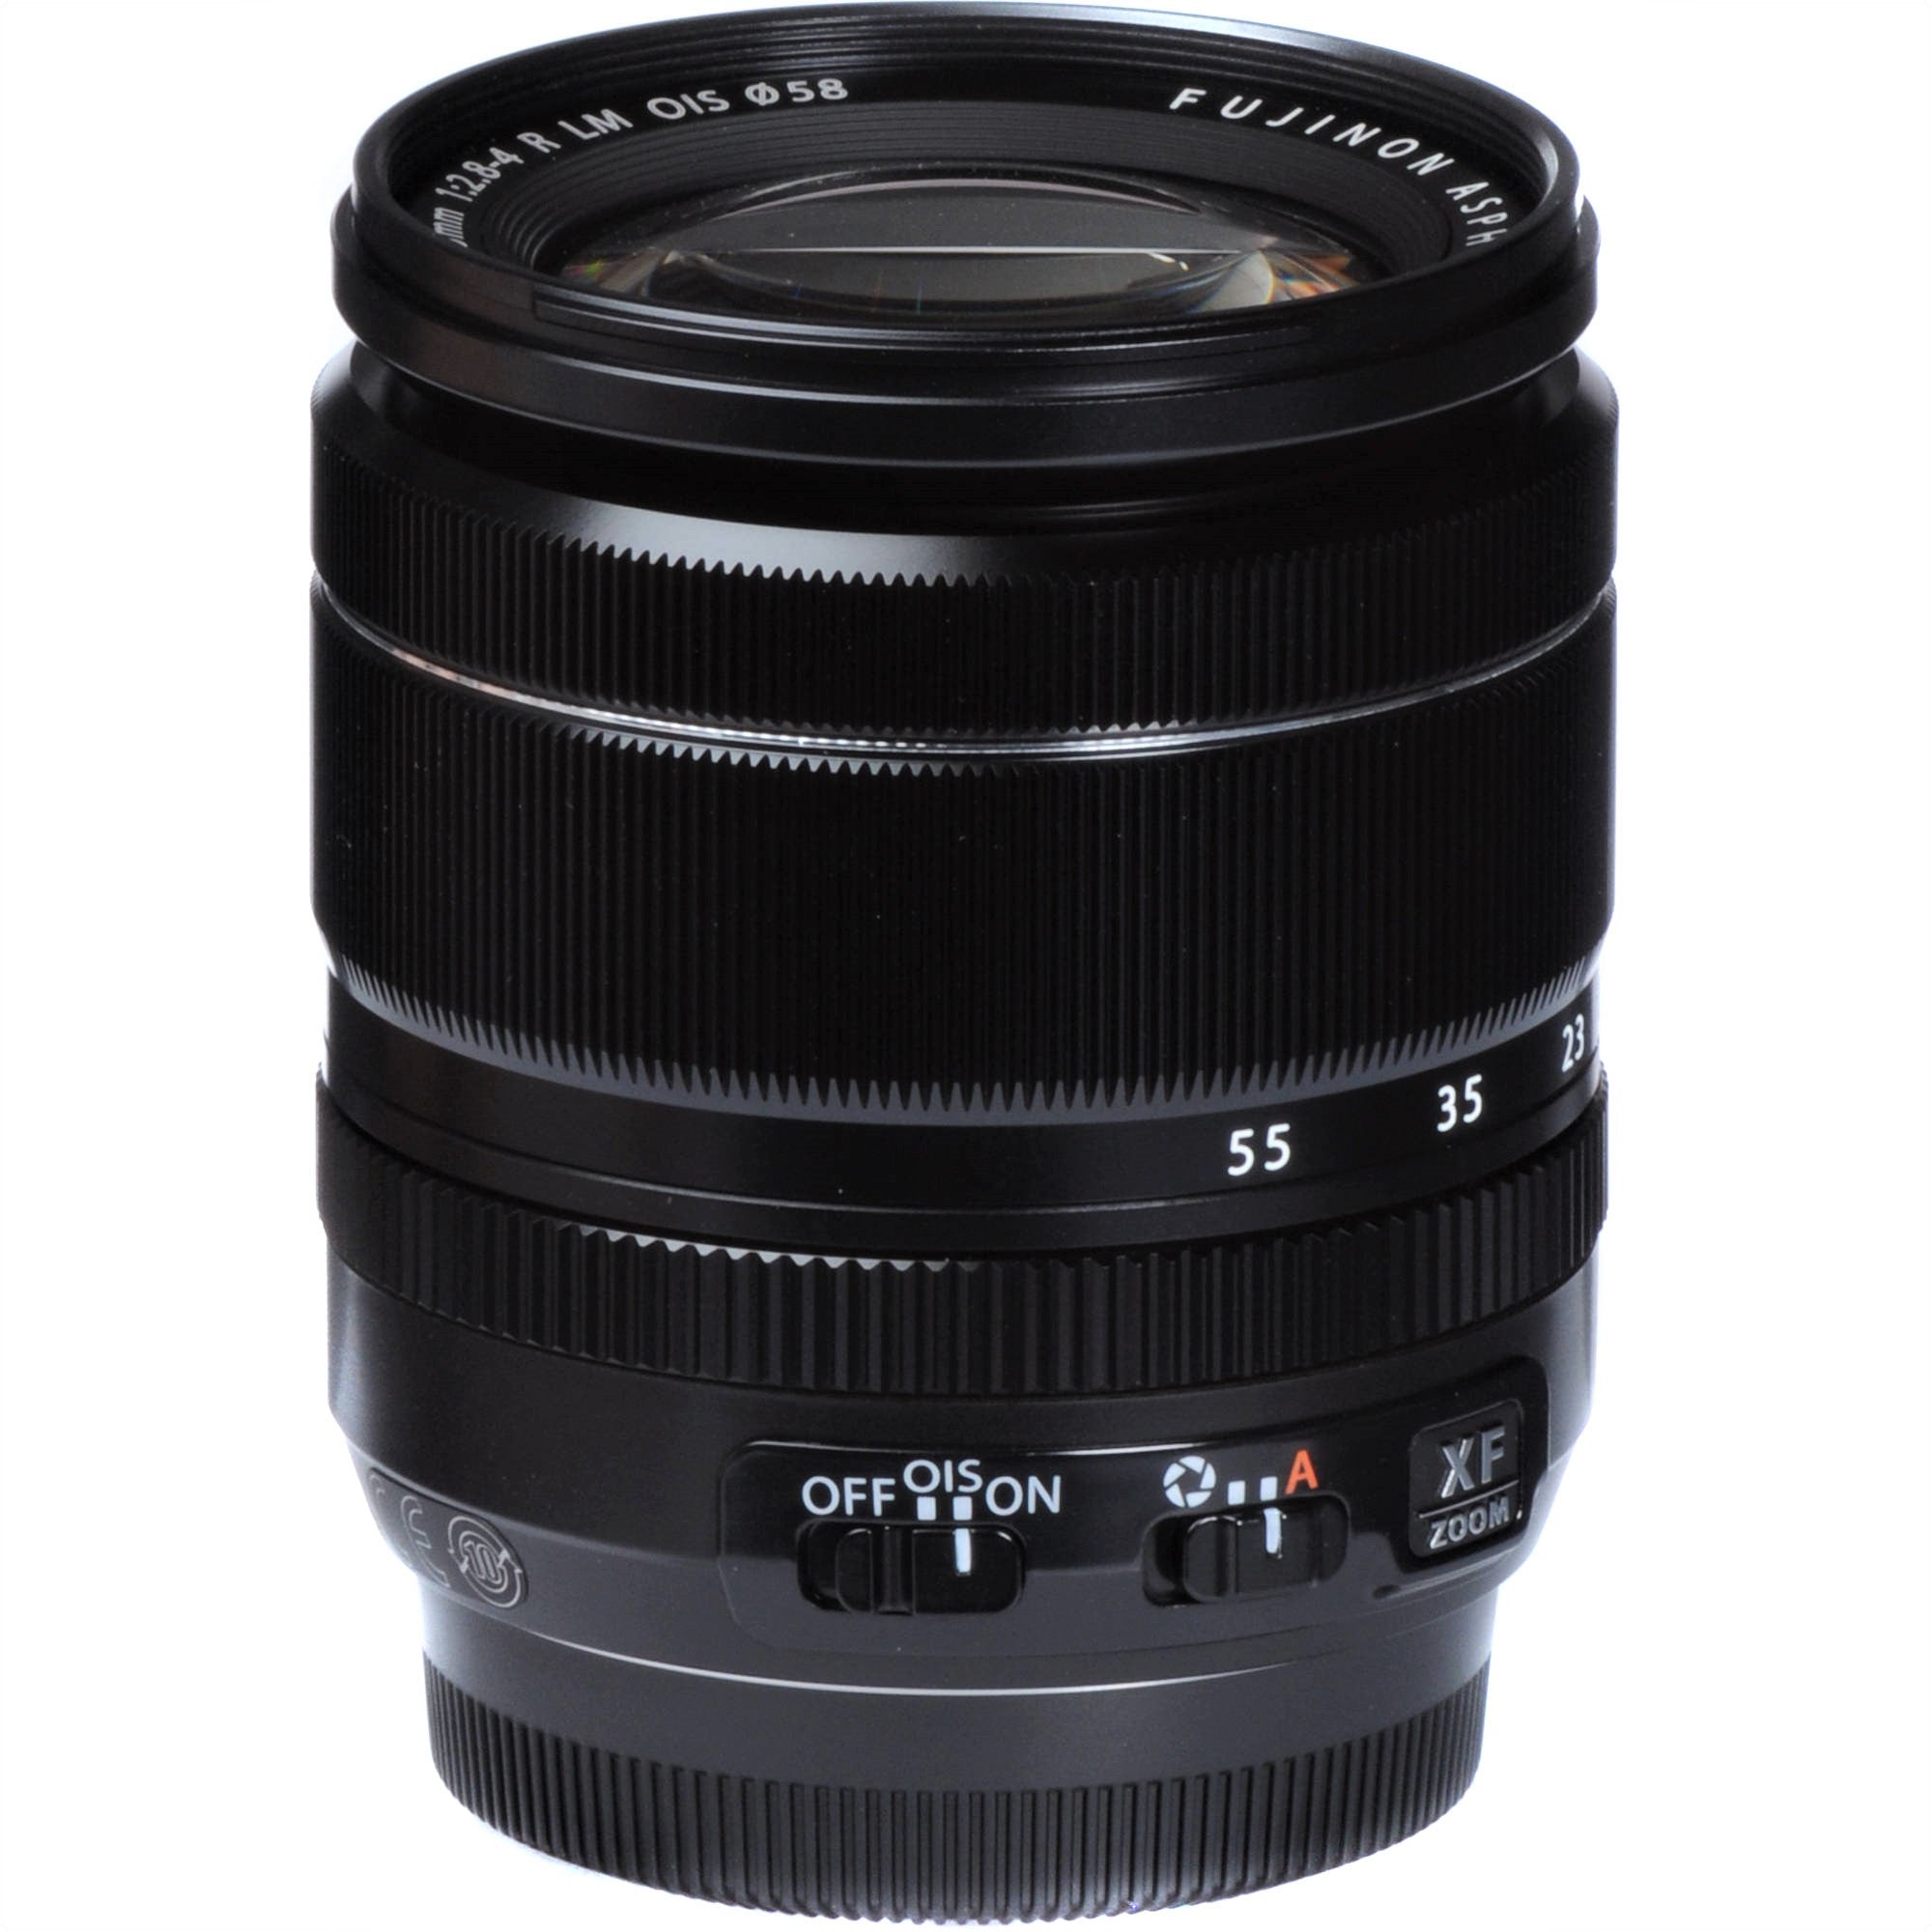 Fujifilm XF18-55mm F2.8-4 R LM OIS Lens